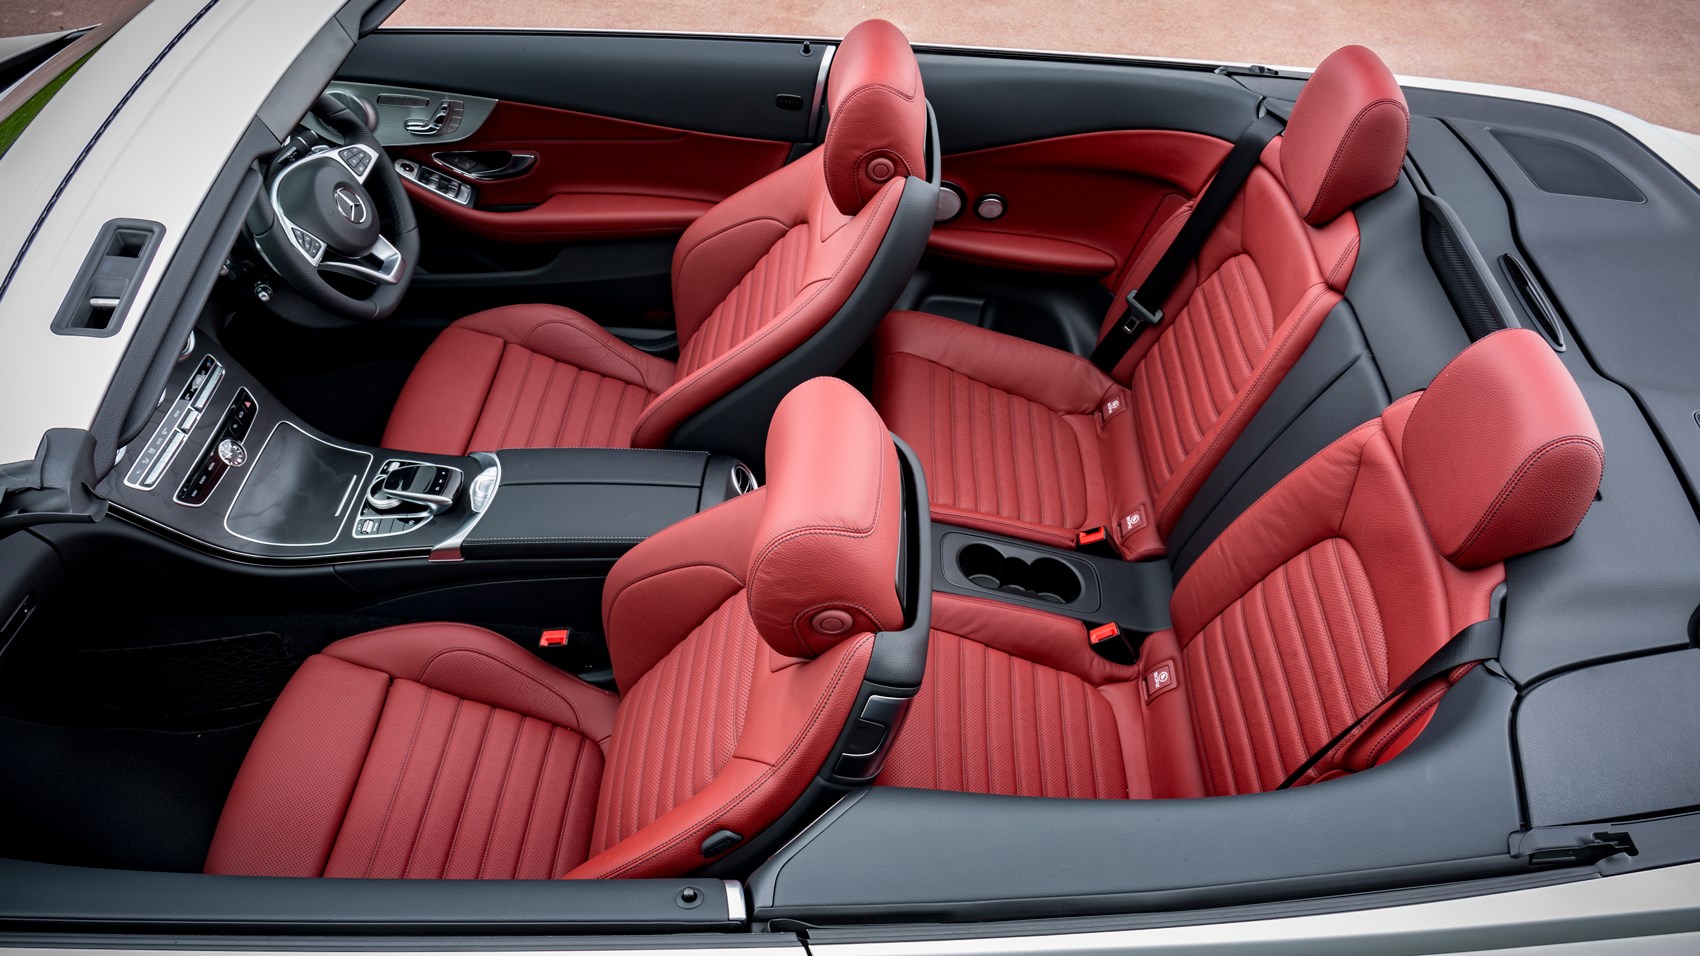 Mercedes C220d Cabrio seats